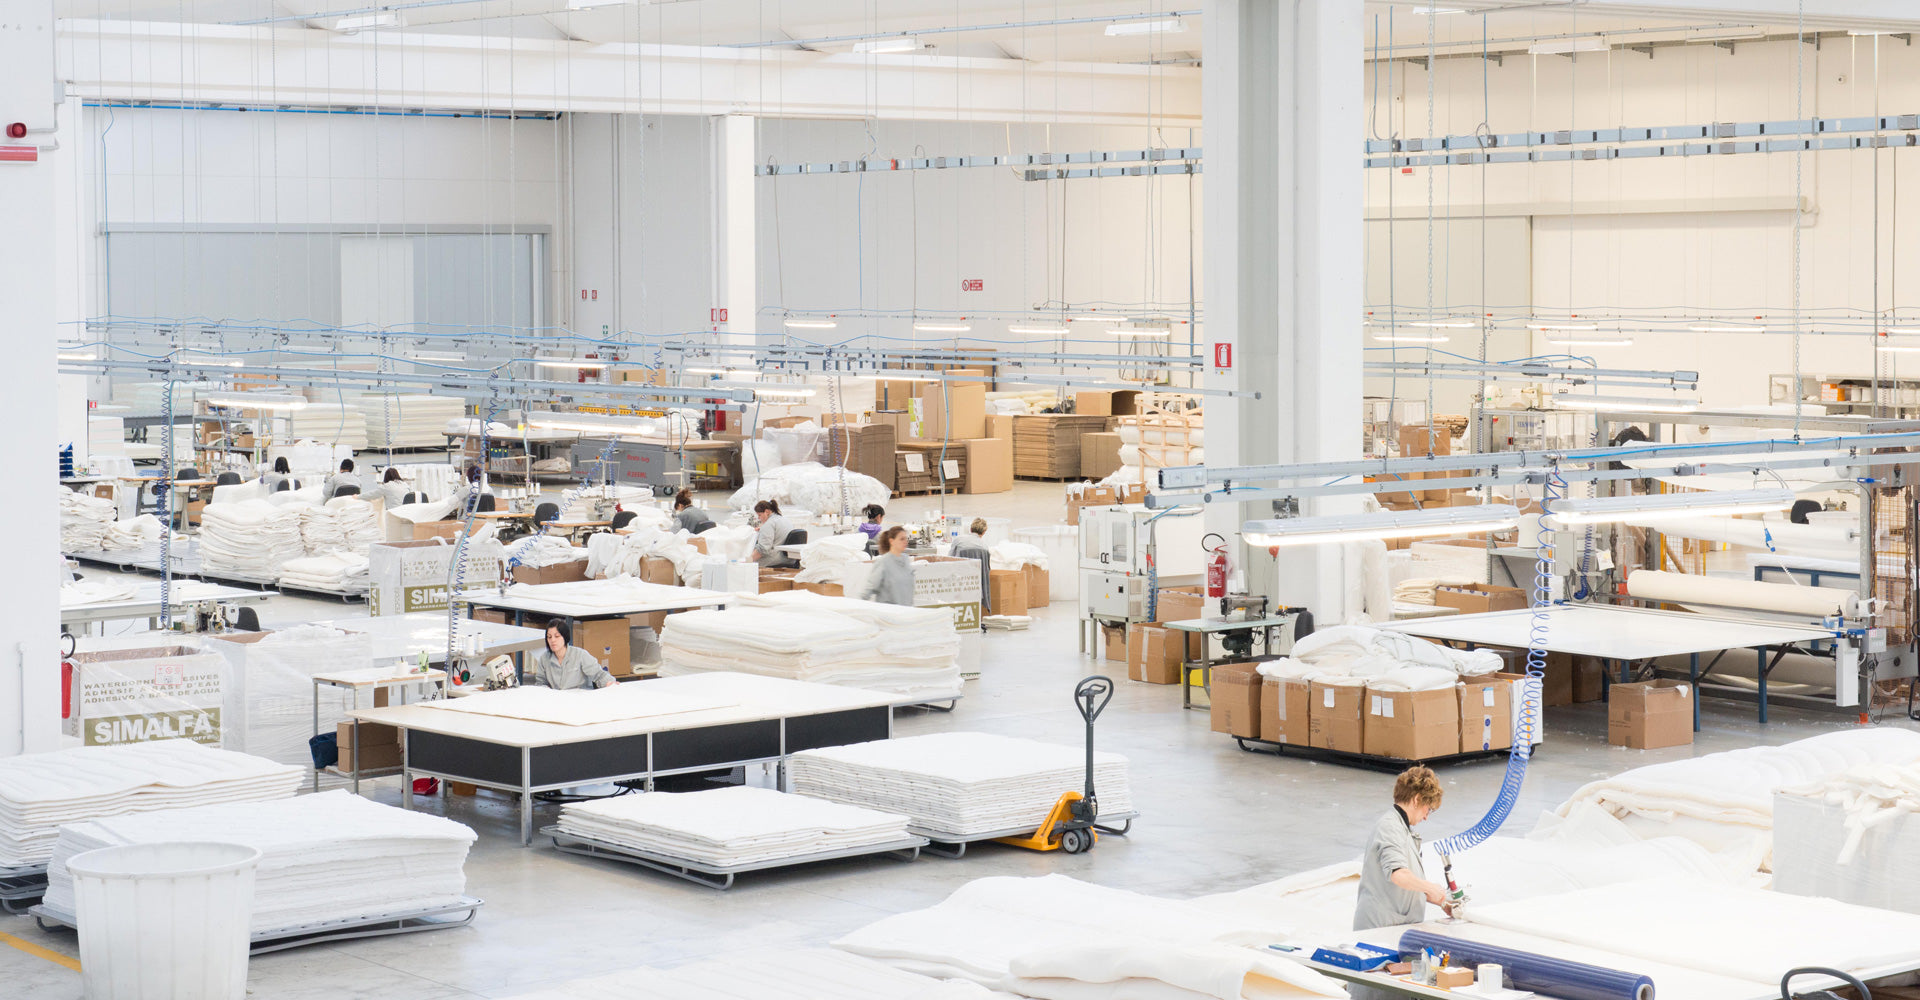 Dorelan mattress factory in Italy